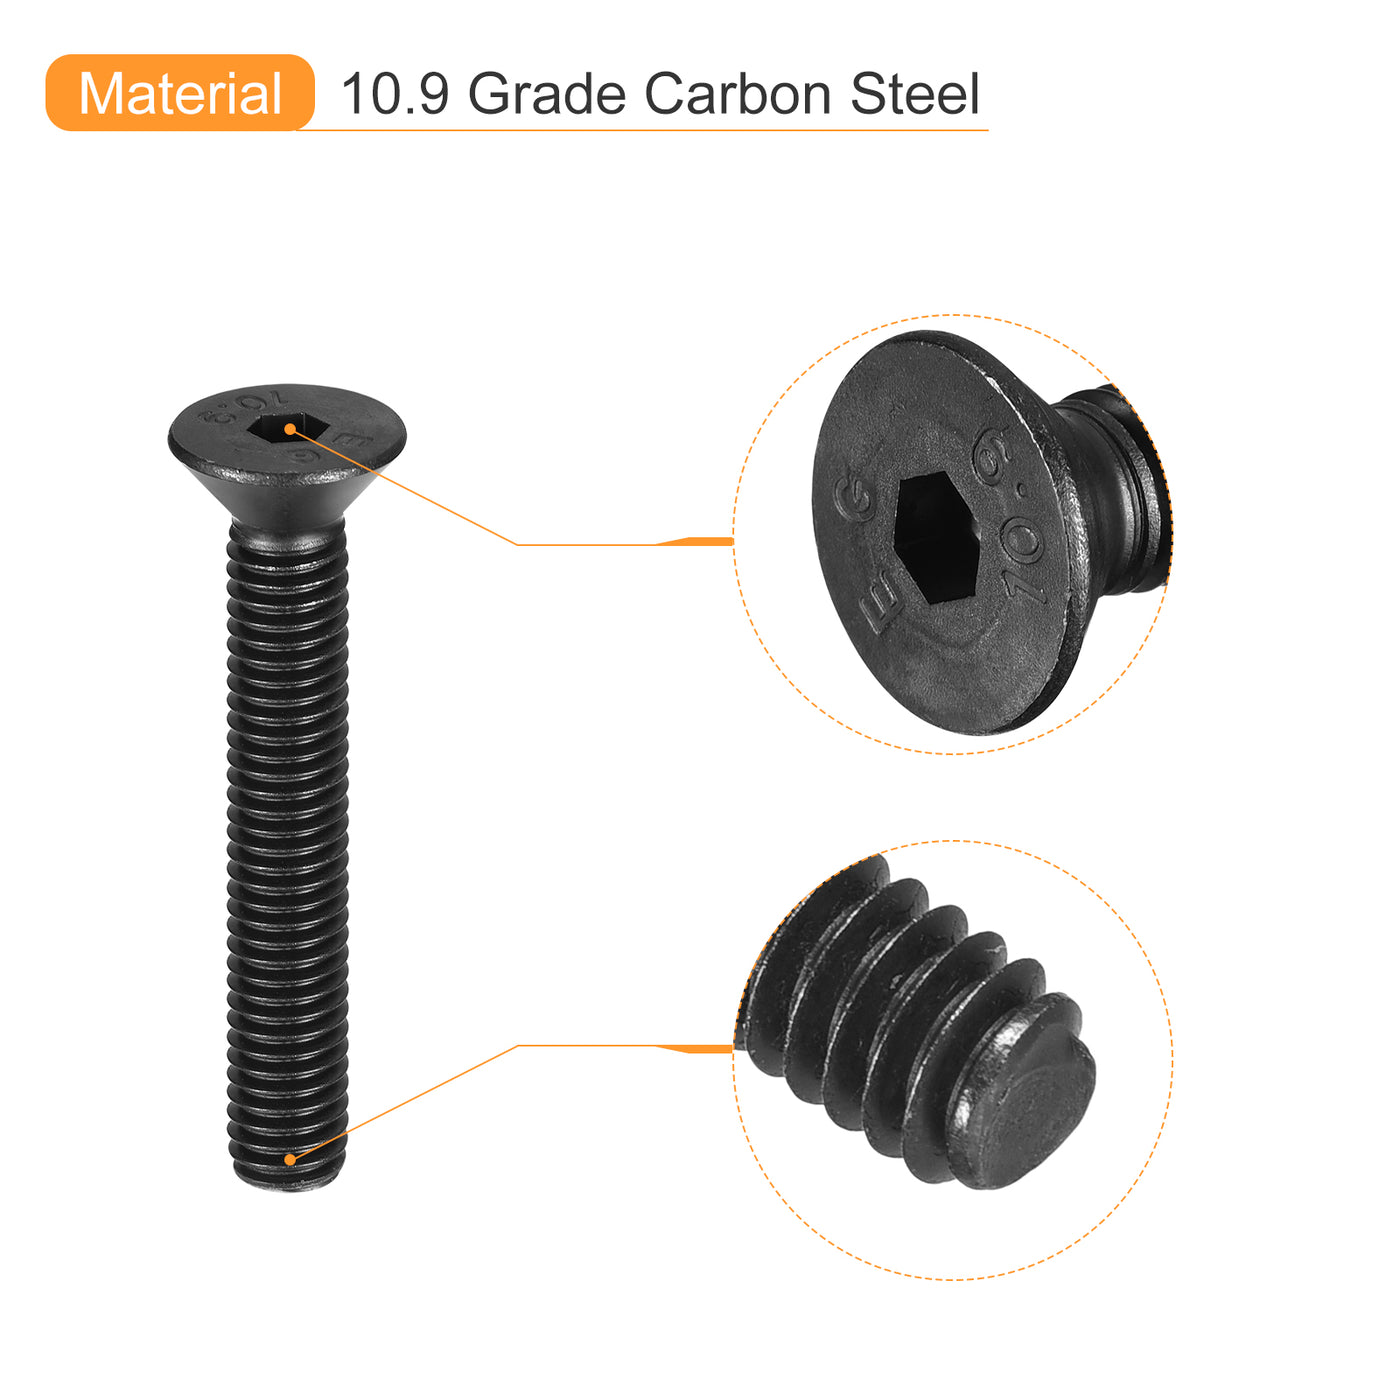 uxcell Uxcell 3/8-16x2-1/2" Flat Head Socket Cap Screws, 10.9 Grade Carbon Steel, 10PCS